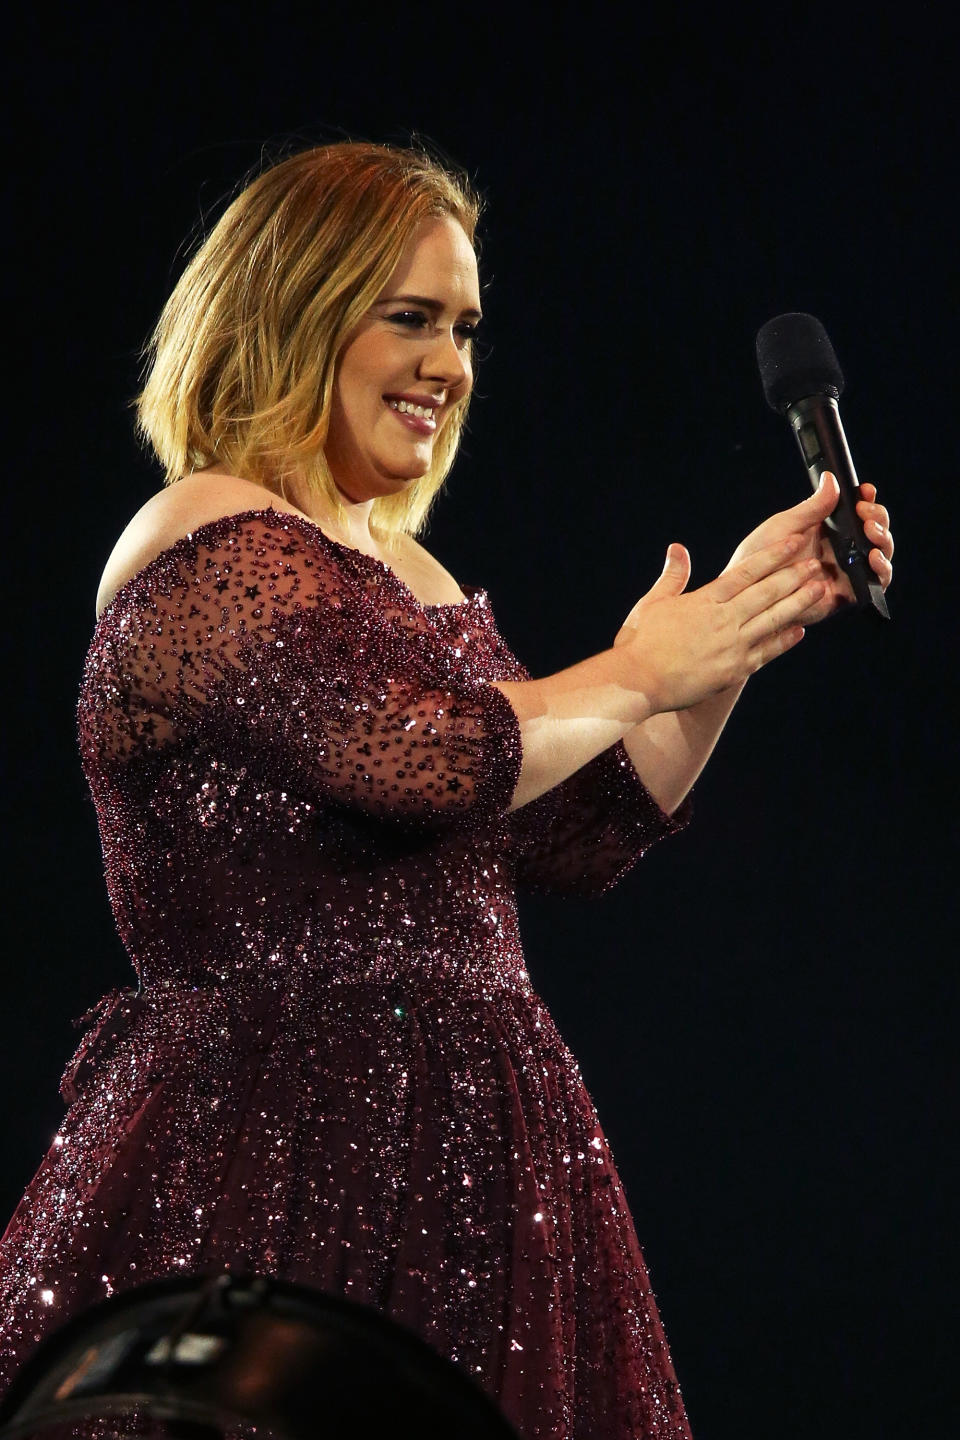 ADELAIDE, AUSTRALIA – MARCH 13: Adele performs at Adelaide Oval on March 13, 2017 in Adelaide, Australia. (Photo by Morne de Klerk/Getty Images)